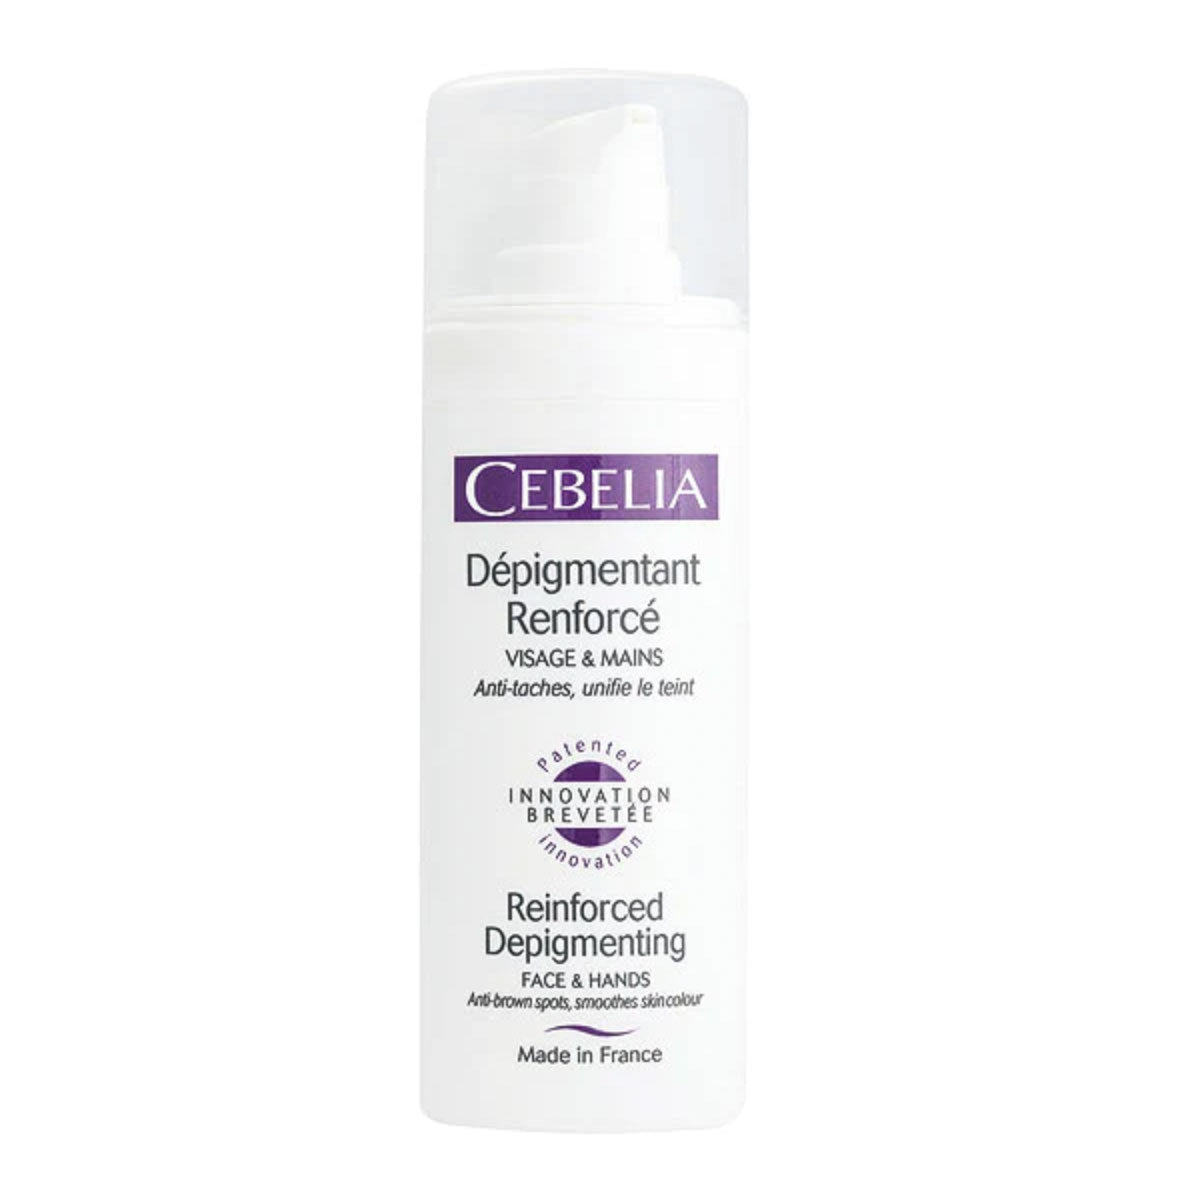 Cebelia – Reinforced Depigmenting 30mL